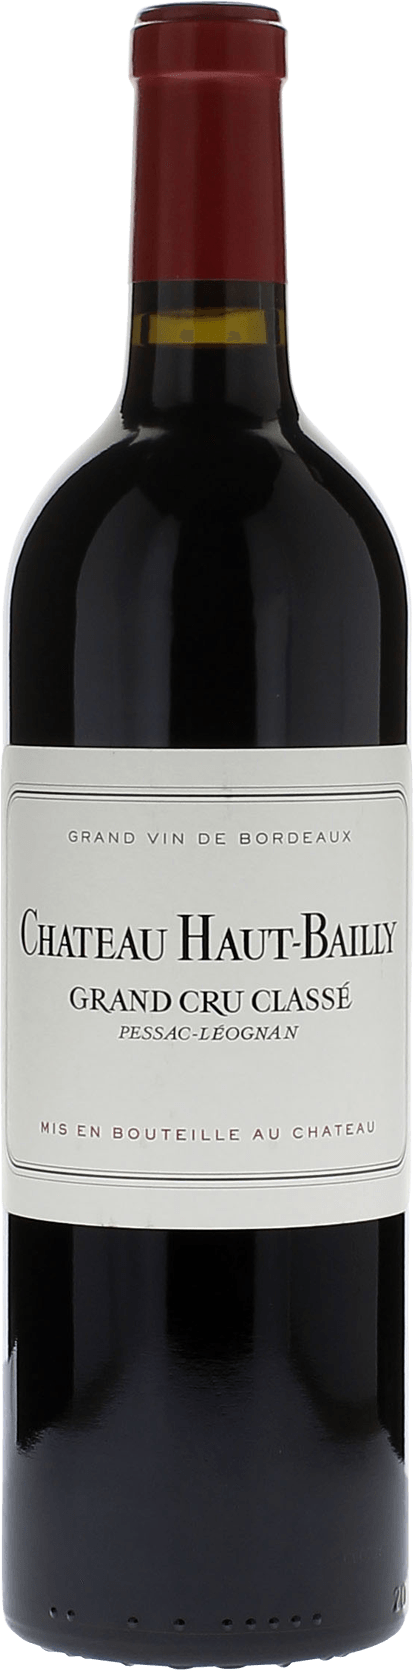 Haut bailly 2003 cru class Pessac-Lognan, Bordeaux rouge